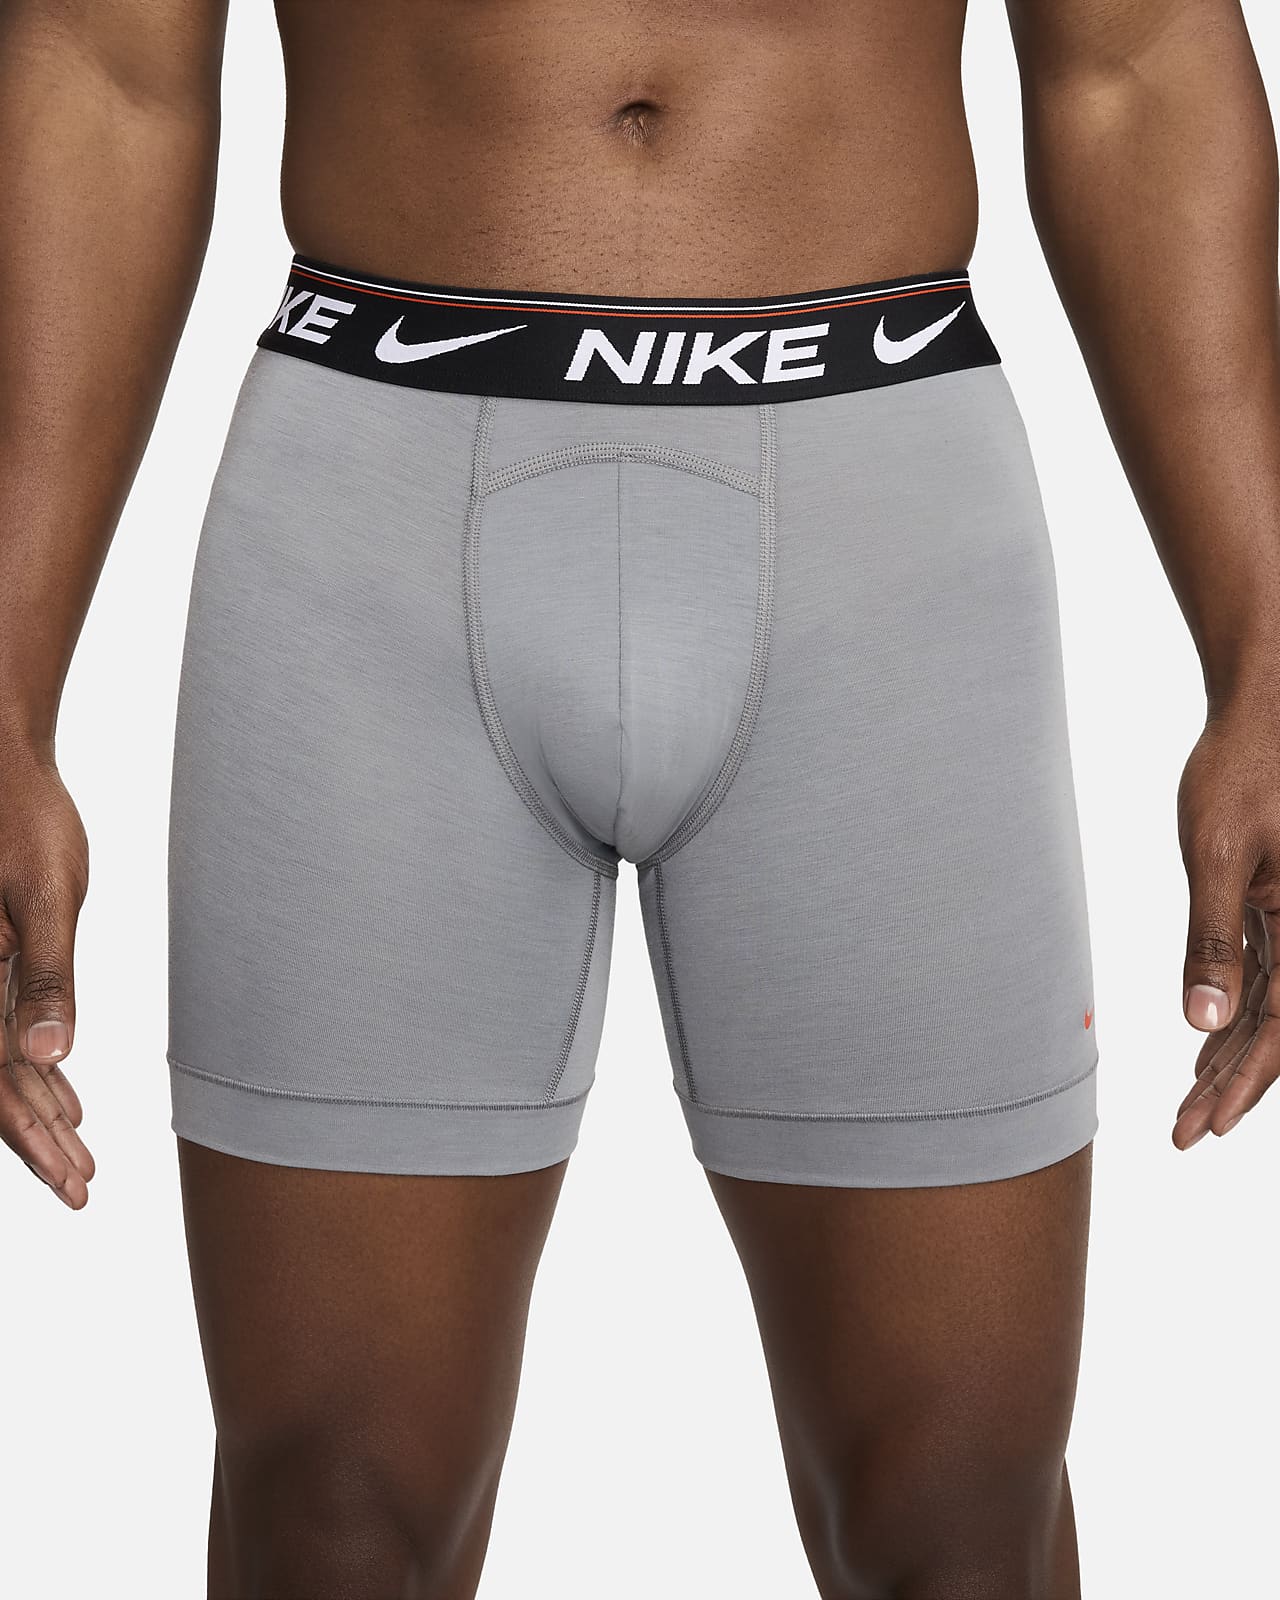 Men Nike Everyday Cotton Stretch Trunks 3 Pack Black Grey White